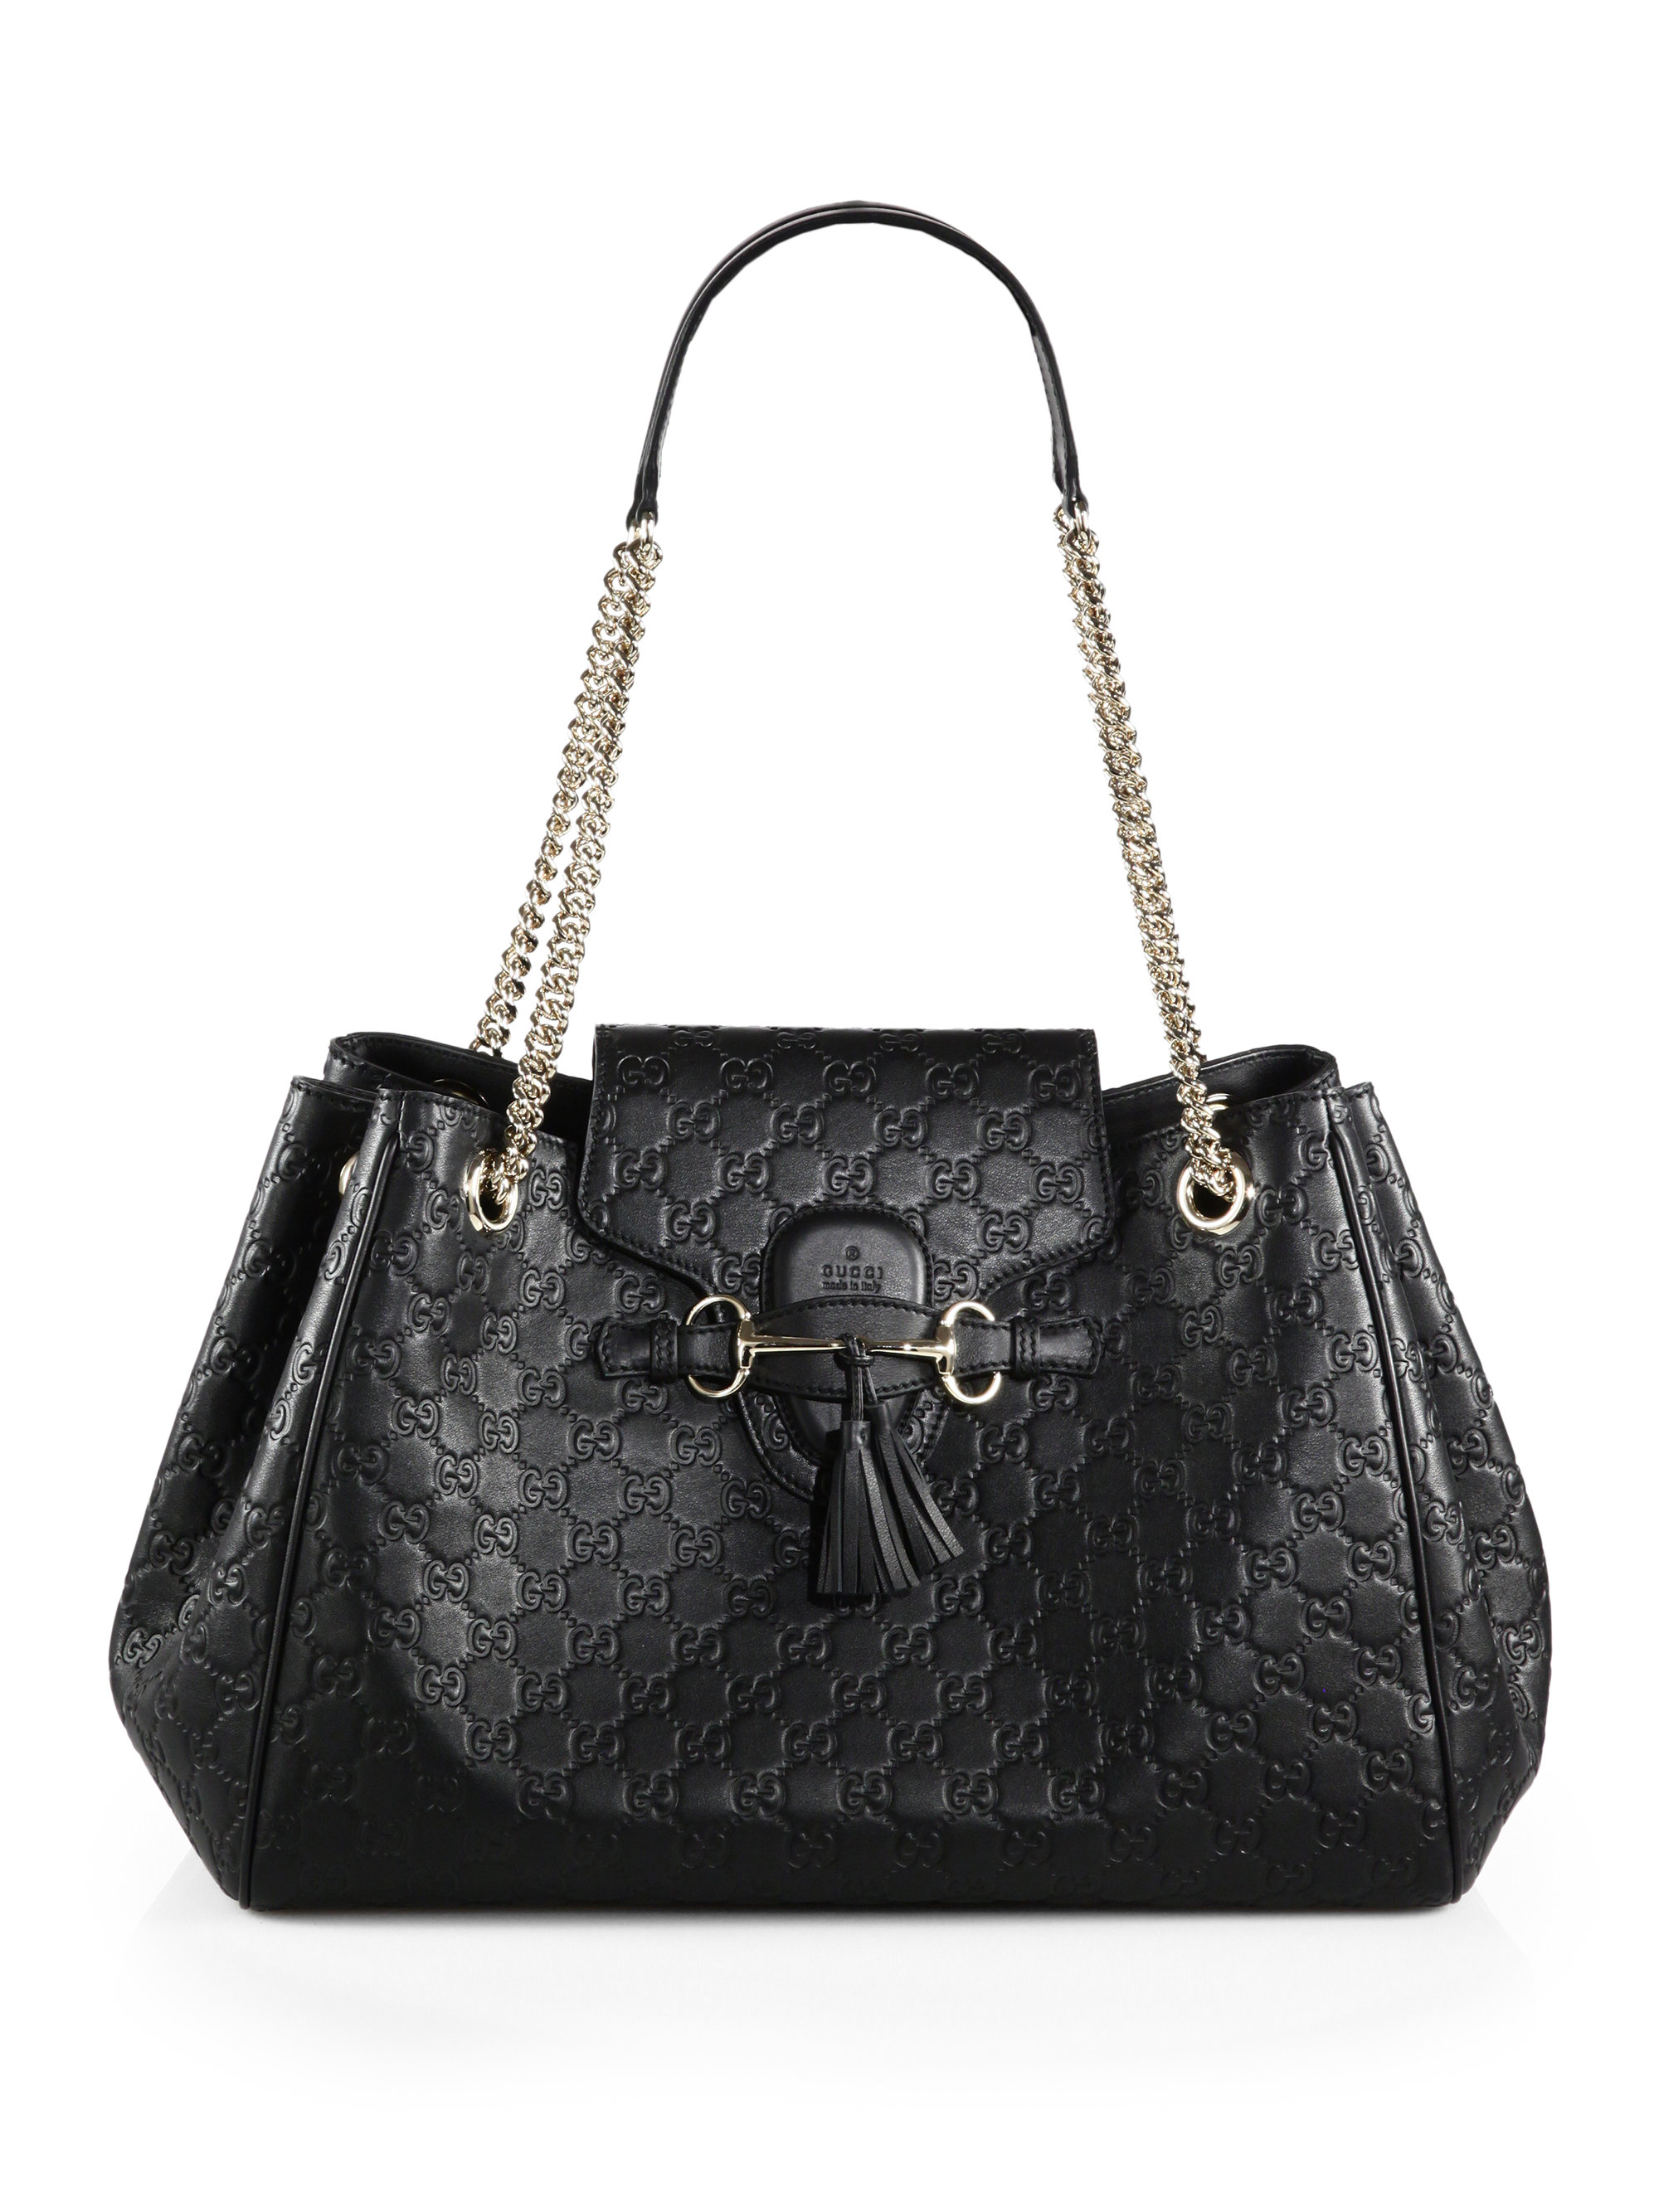 Gucci Emily Ssima Leather Shoulder Bag in Black | Lyst